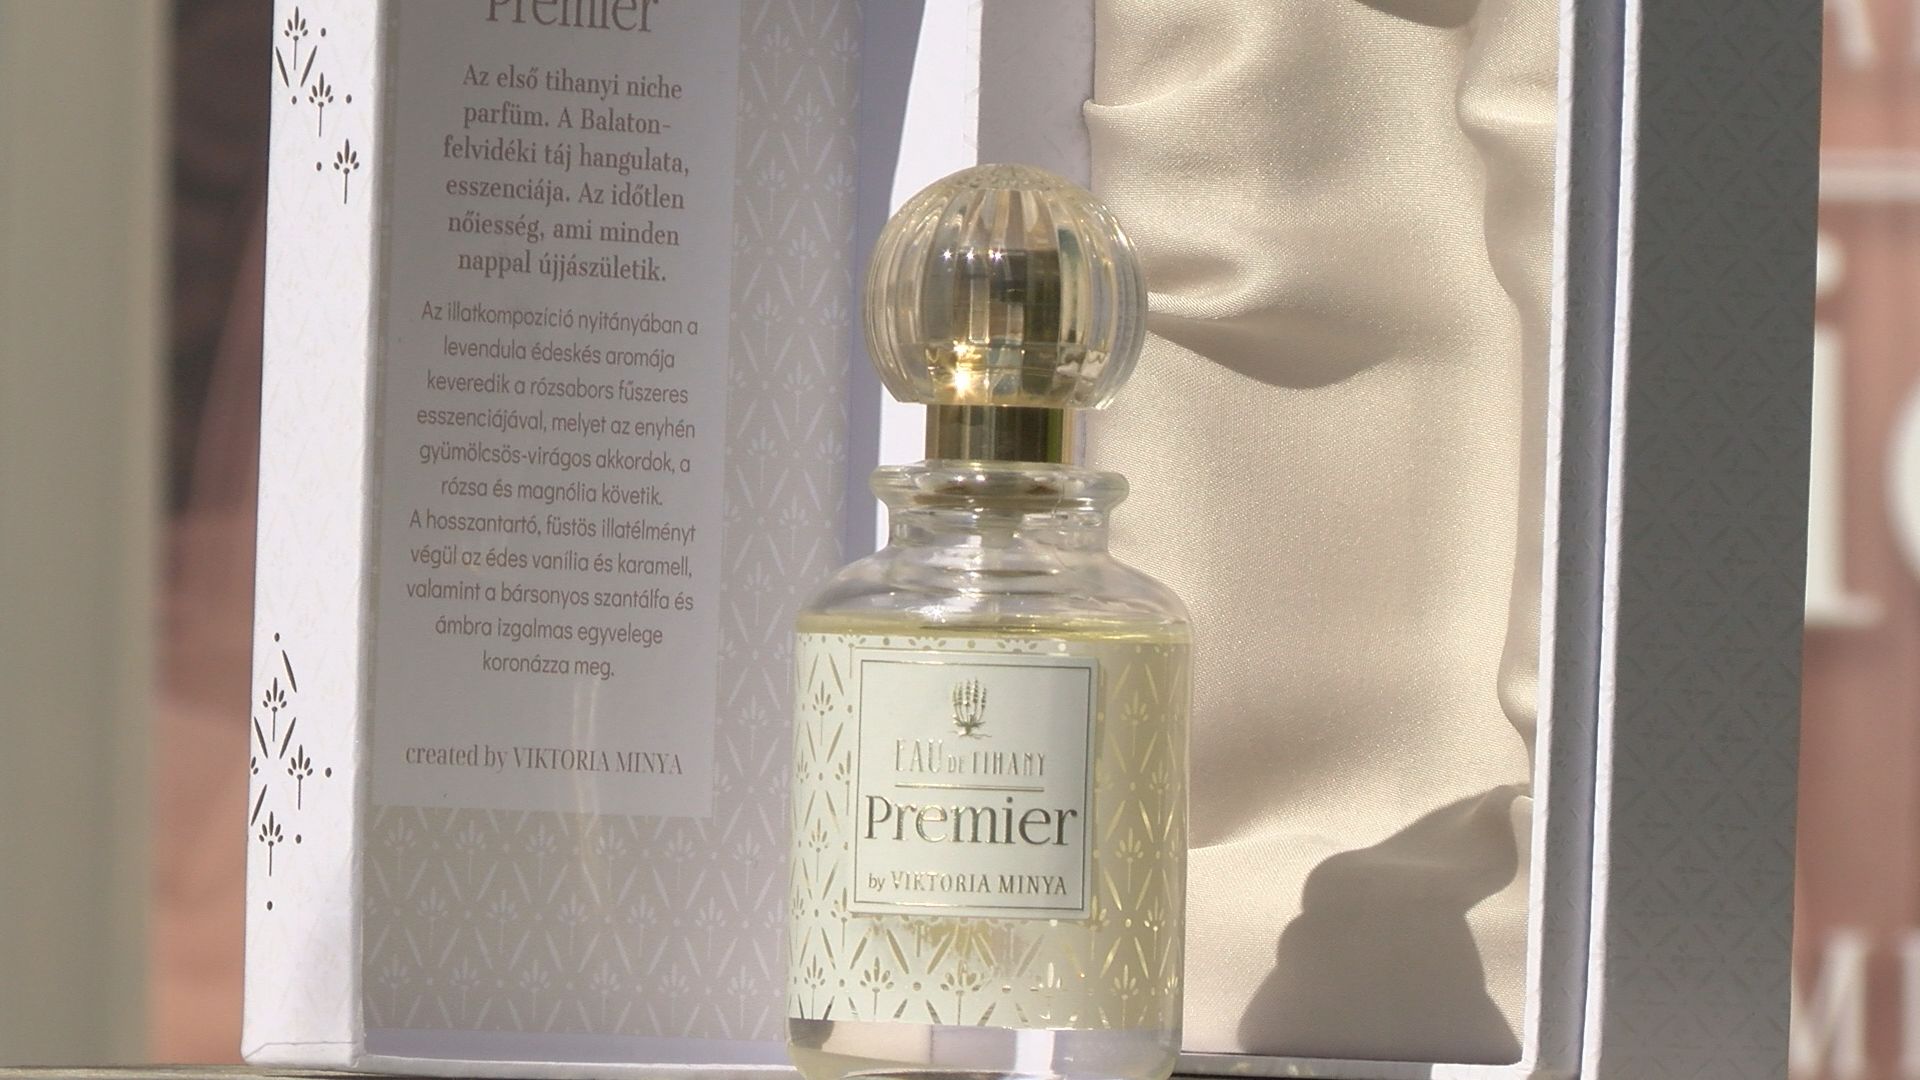 A Premier premierjén, Tihanynak saját parfümje van